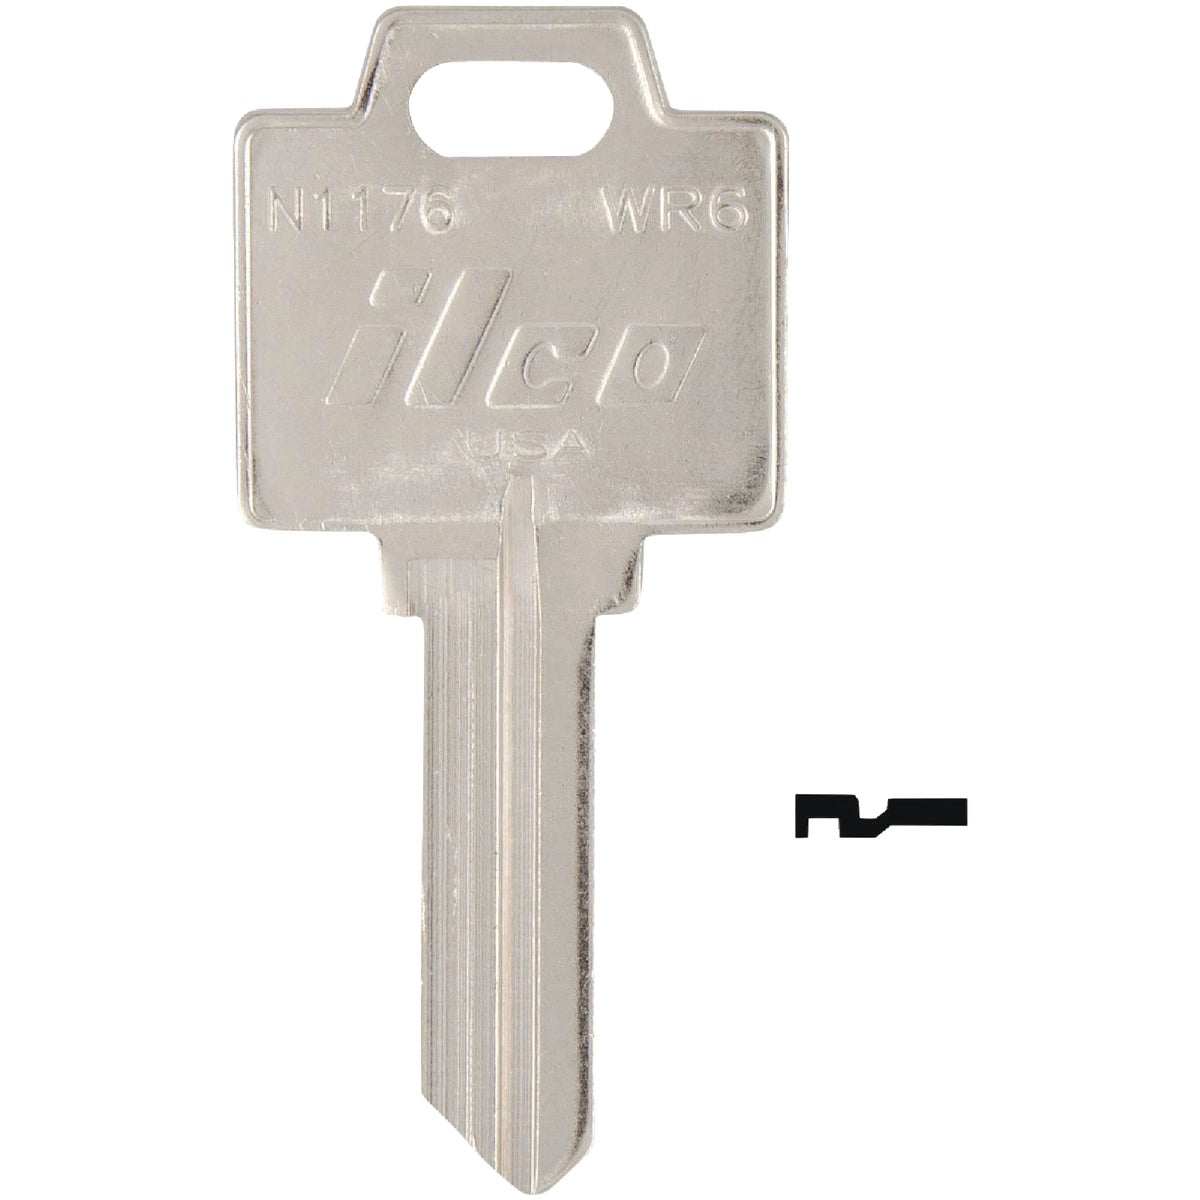 ILCO WR6 Weiser Cylinder Key Blank N1176 (10-Pack)